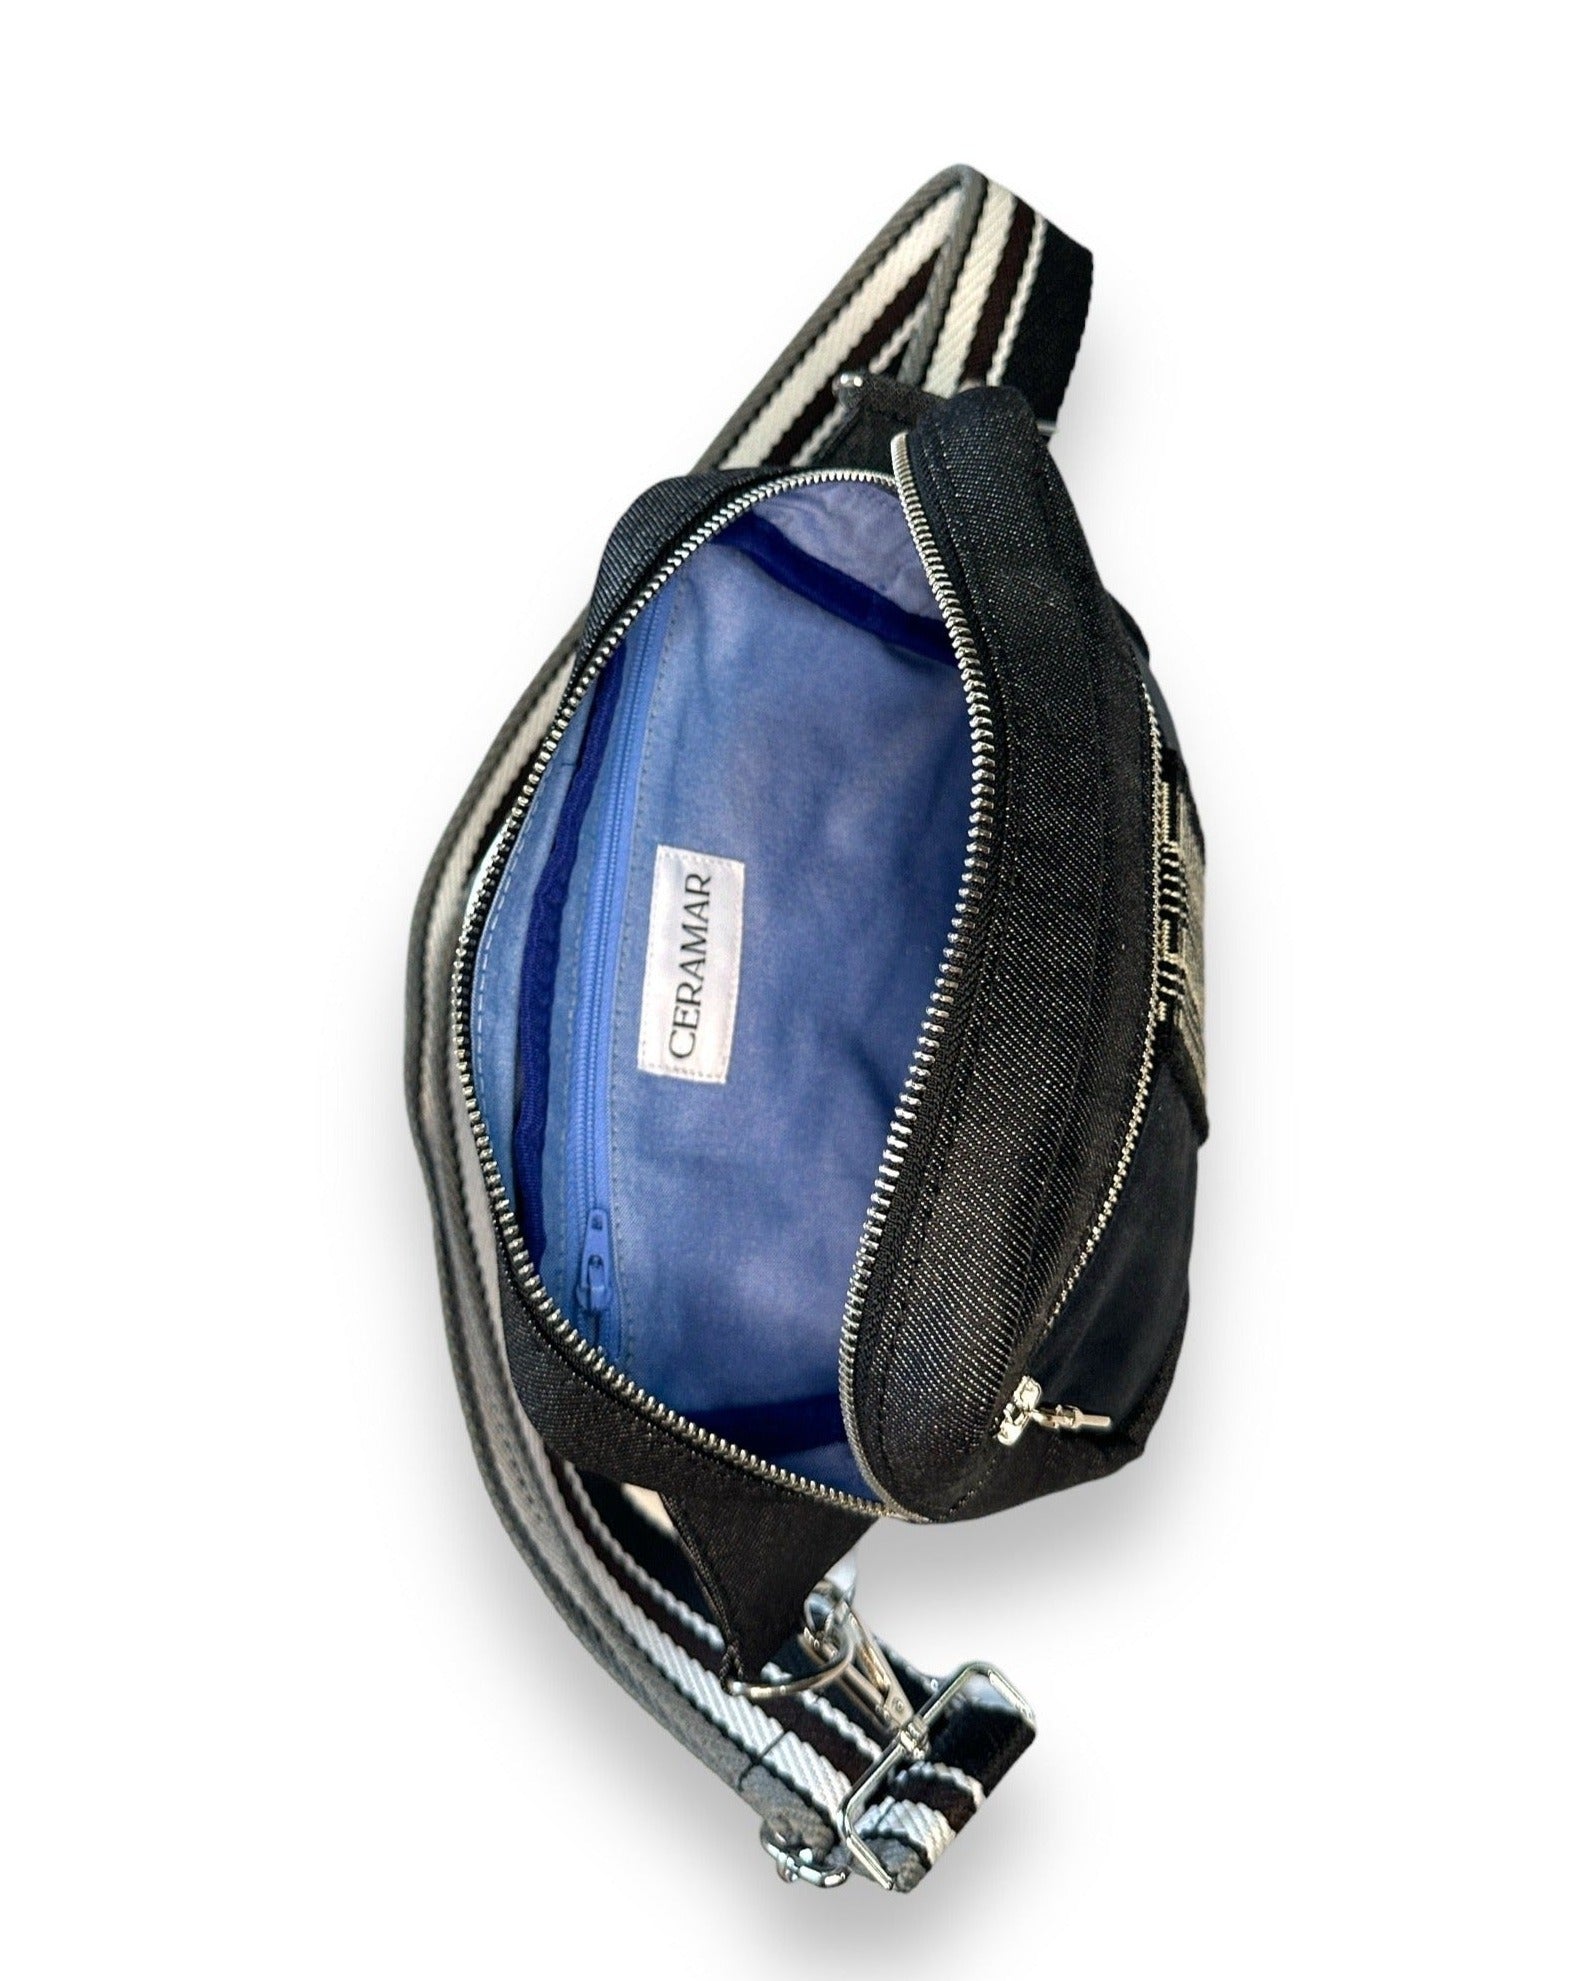 Black sling unisex crossbody bag. 